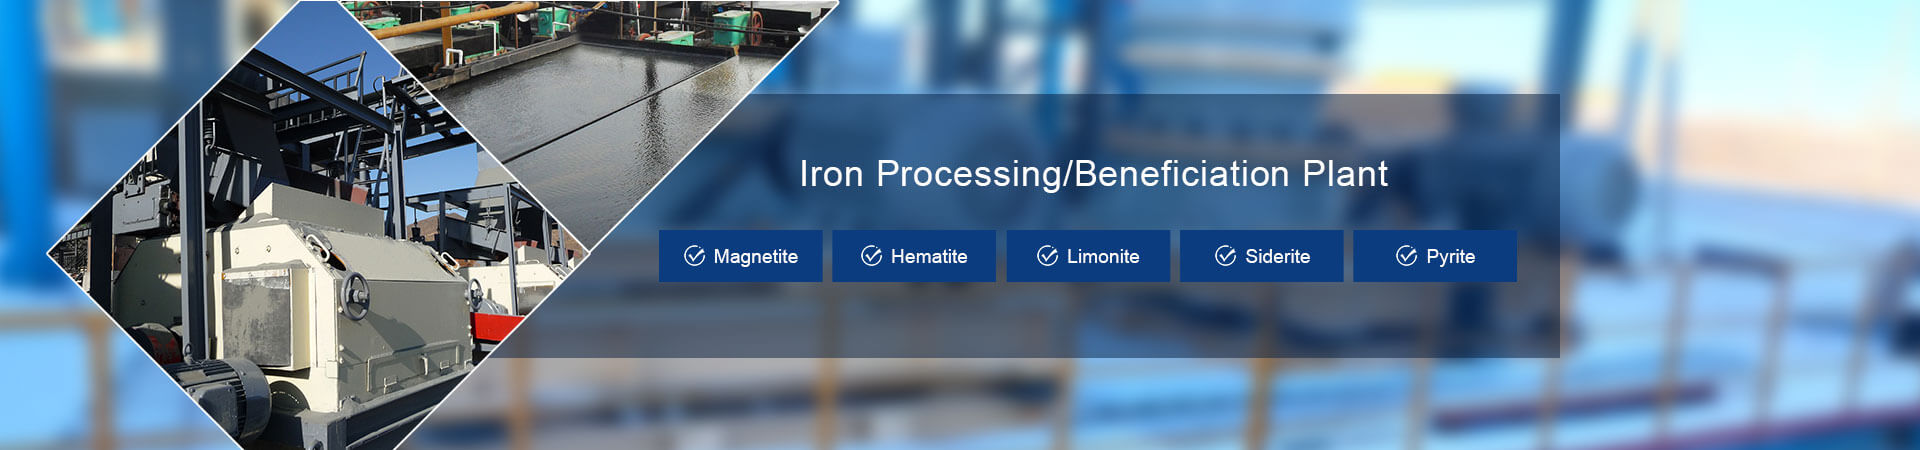 Iron Processing/Beneficiation Plant